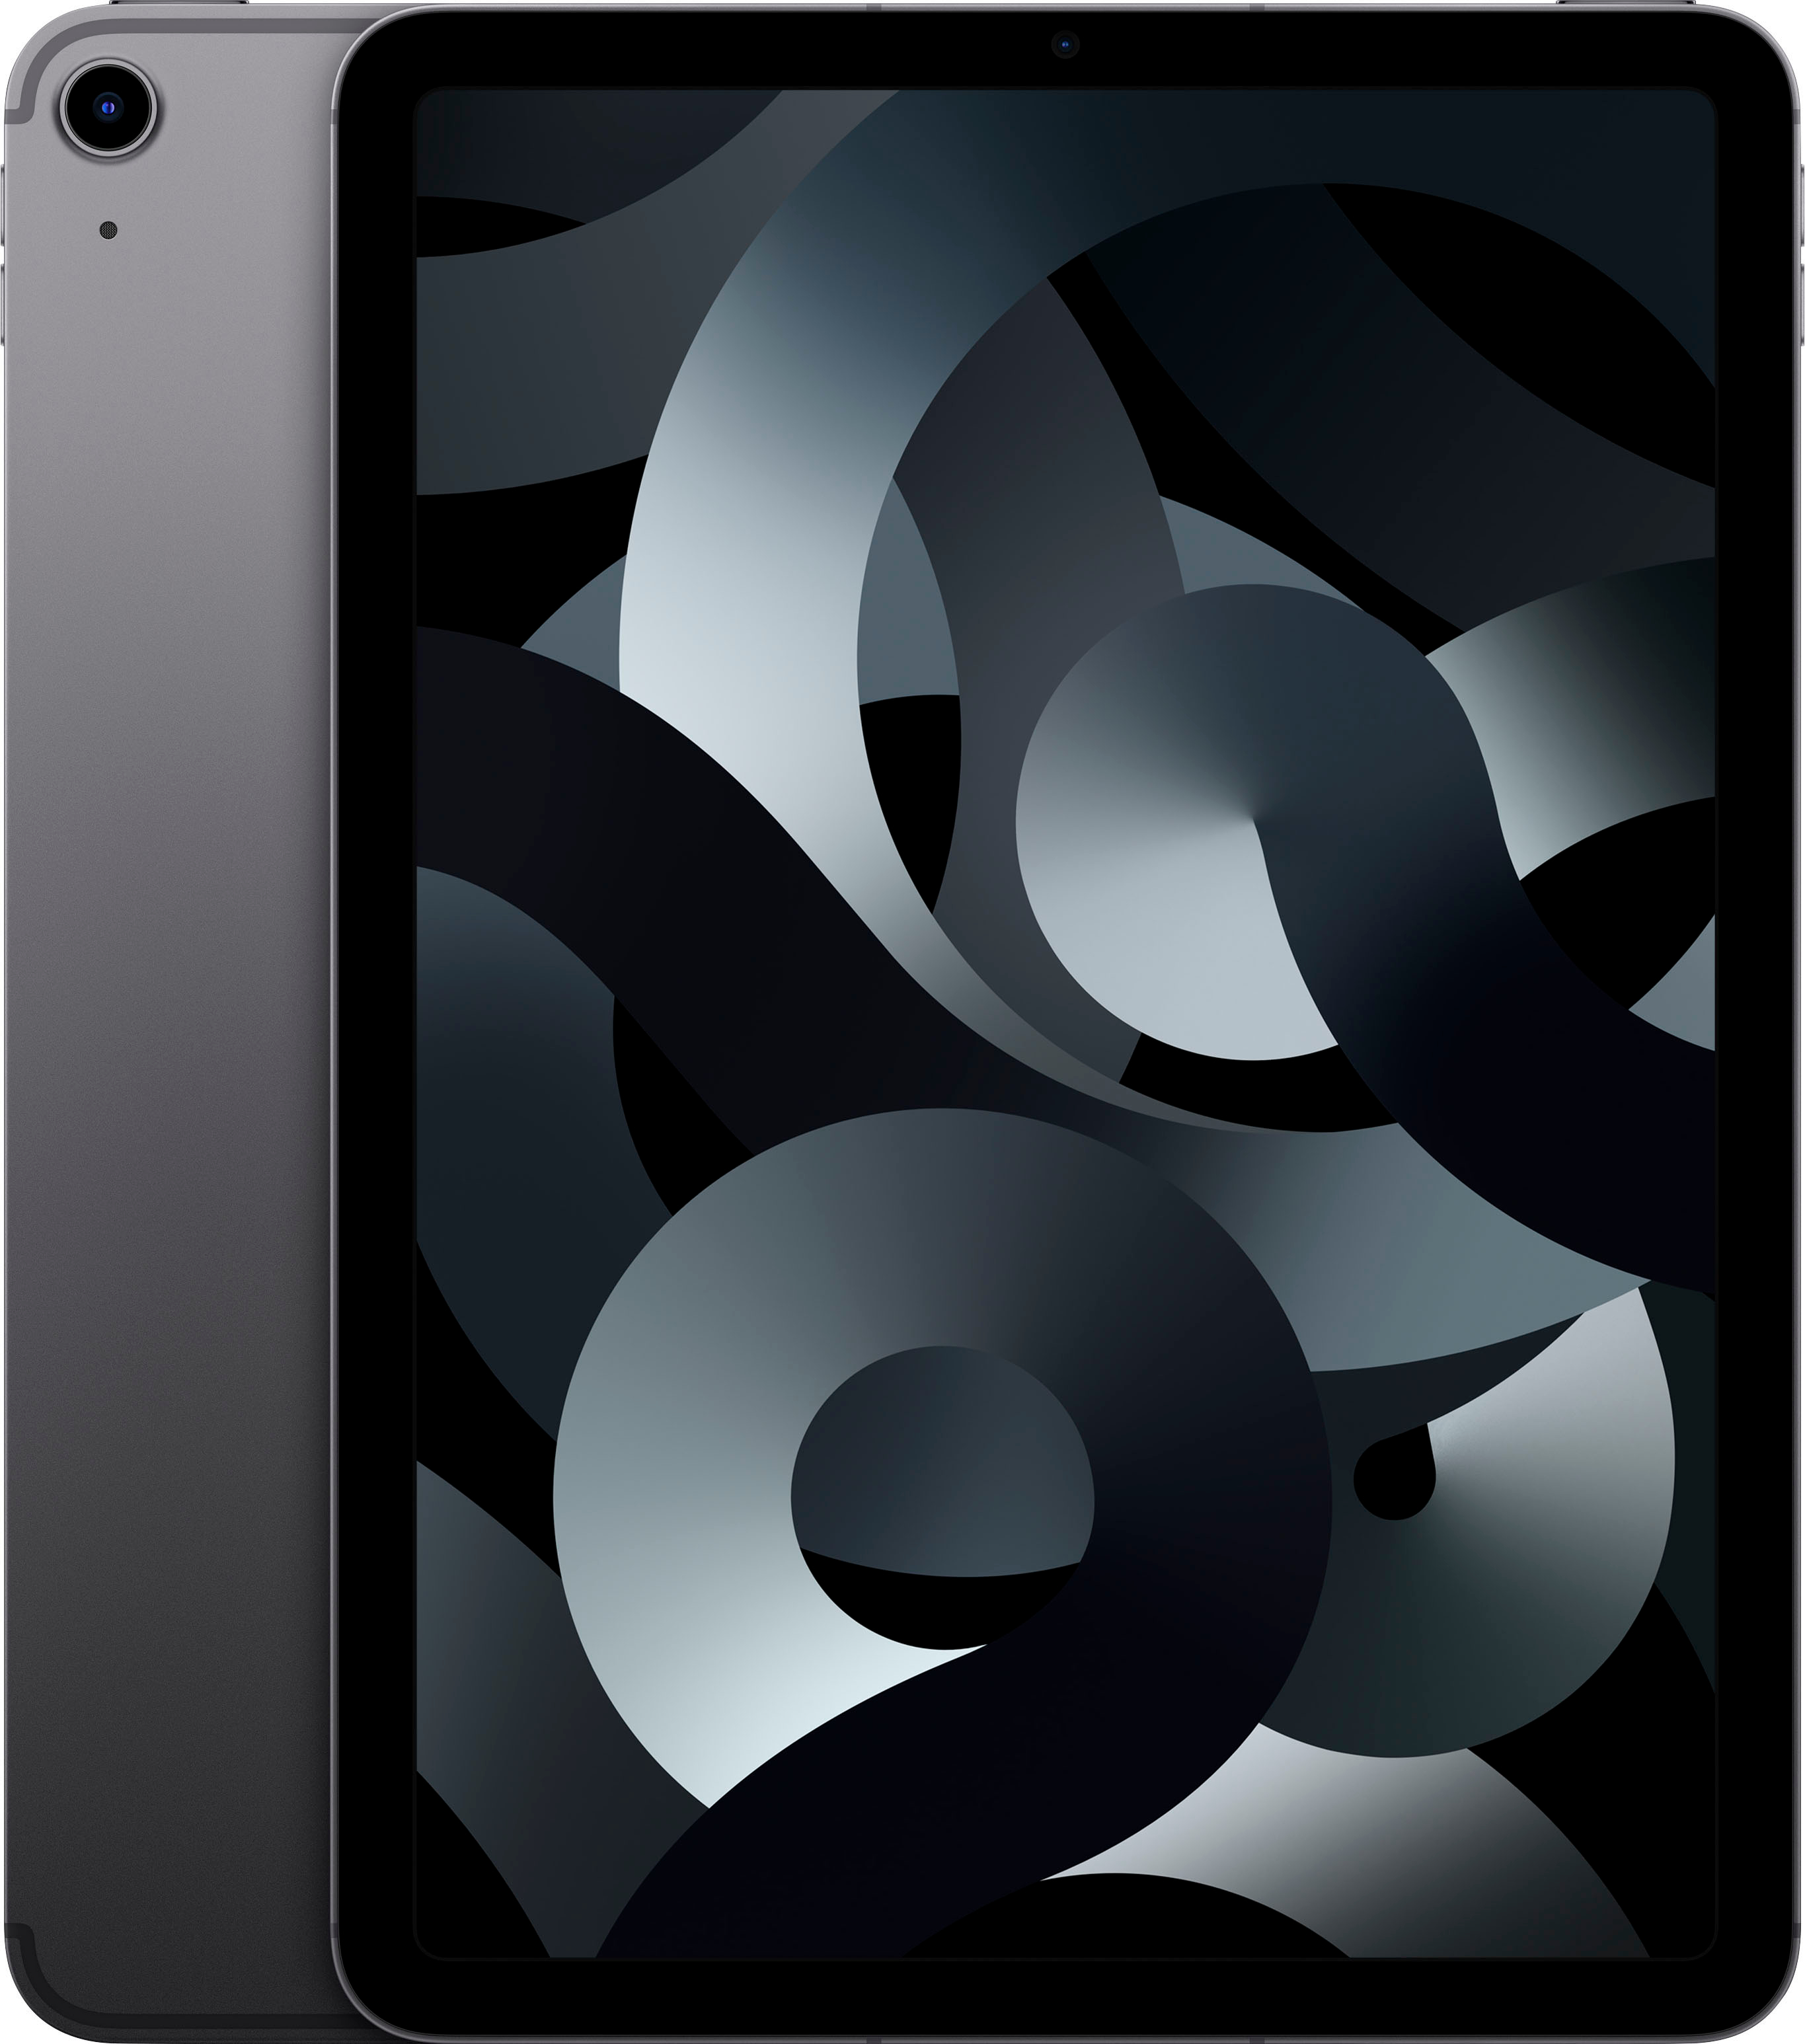 Apple iPad 9th Generation Wi-Fi 10.2 Display 64GB - Space Gray / Gold - NEW